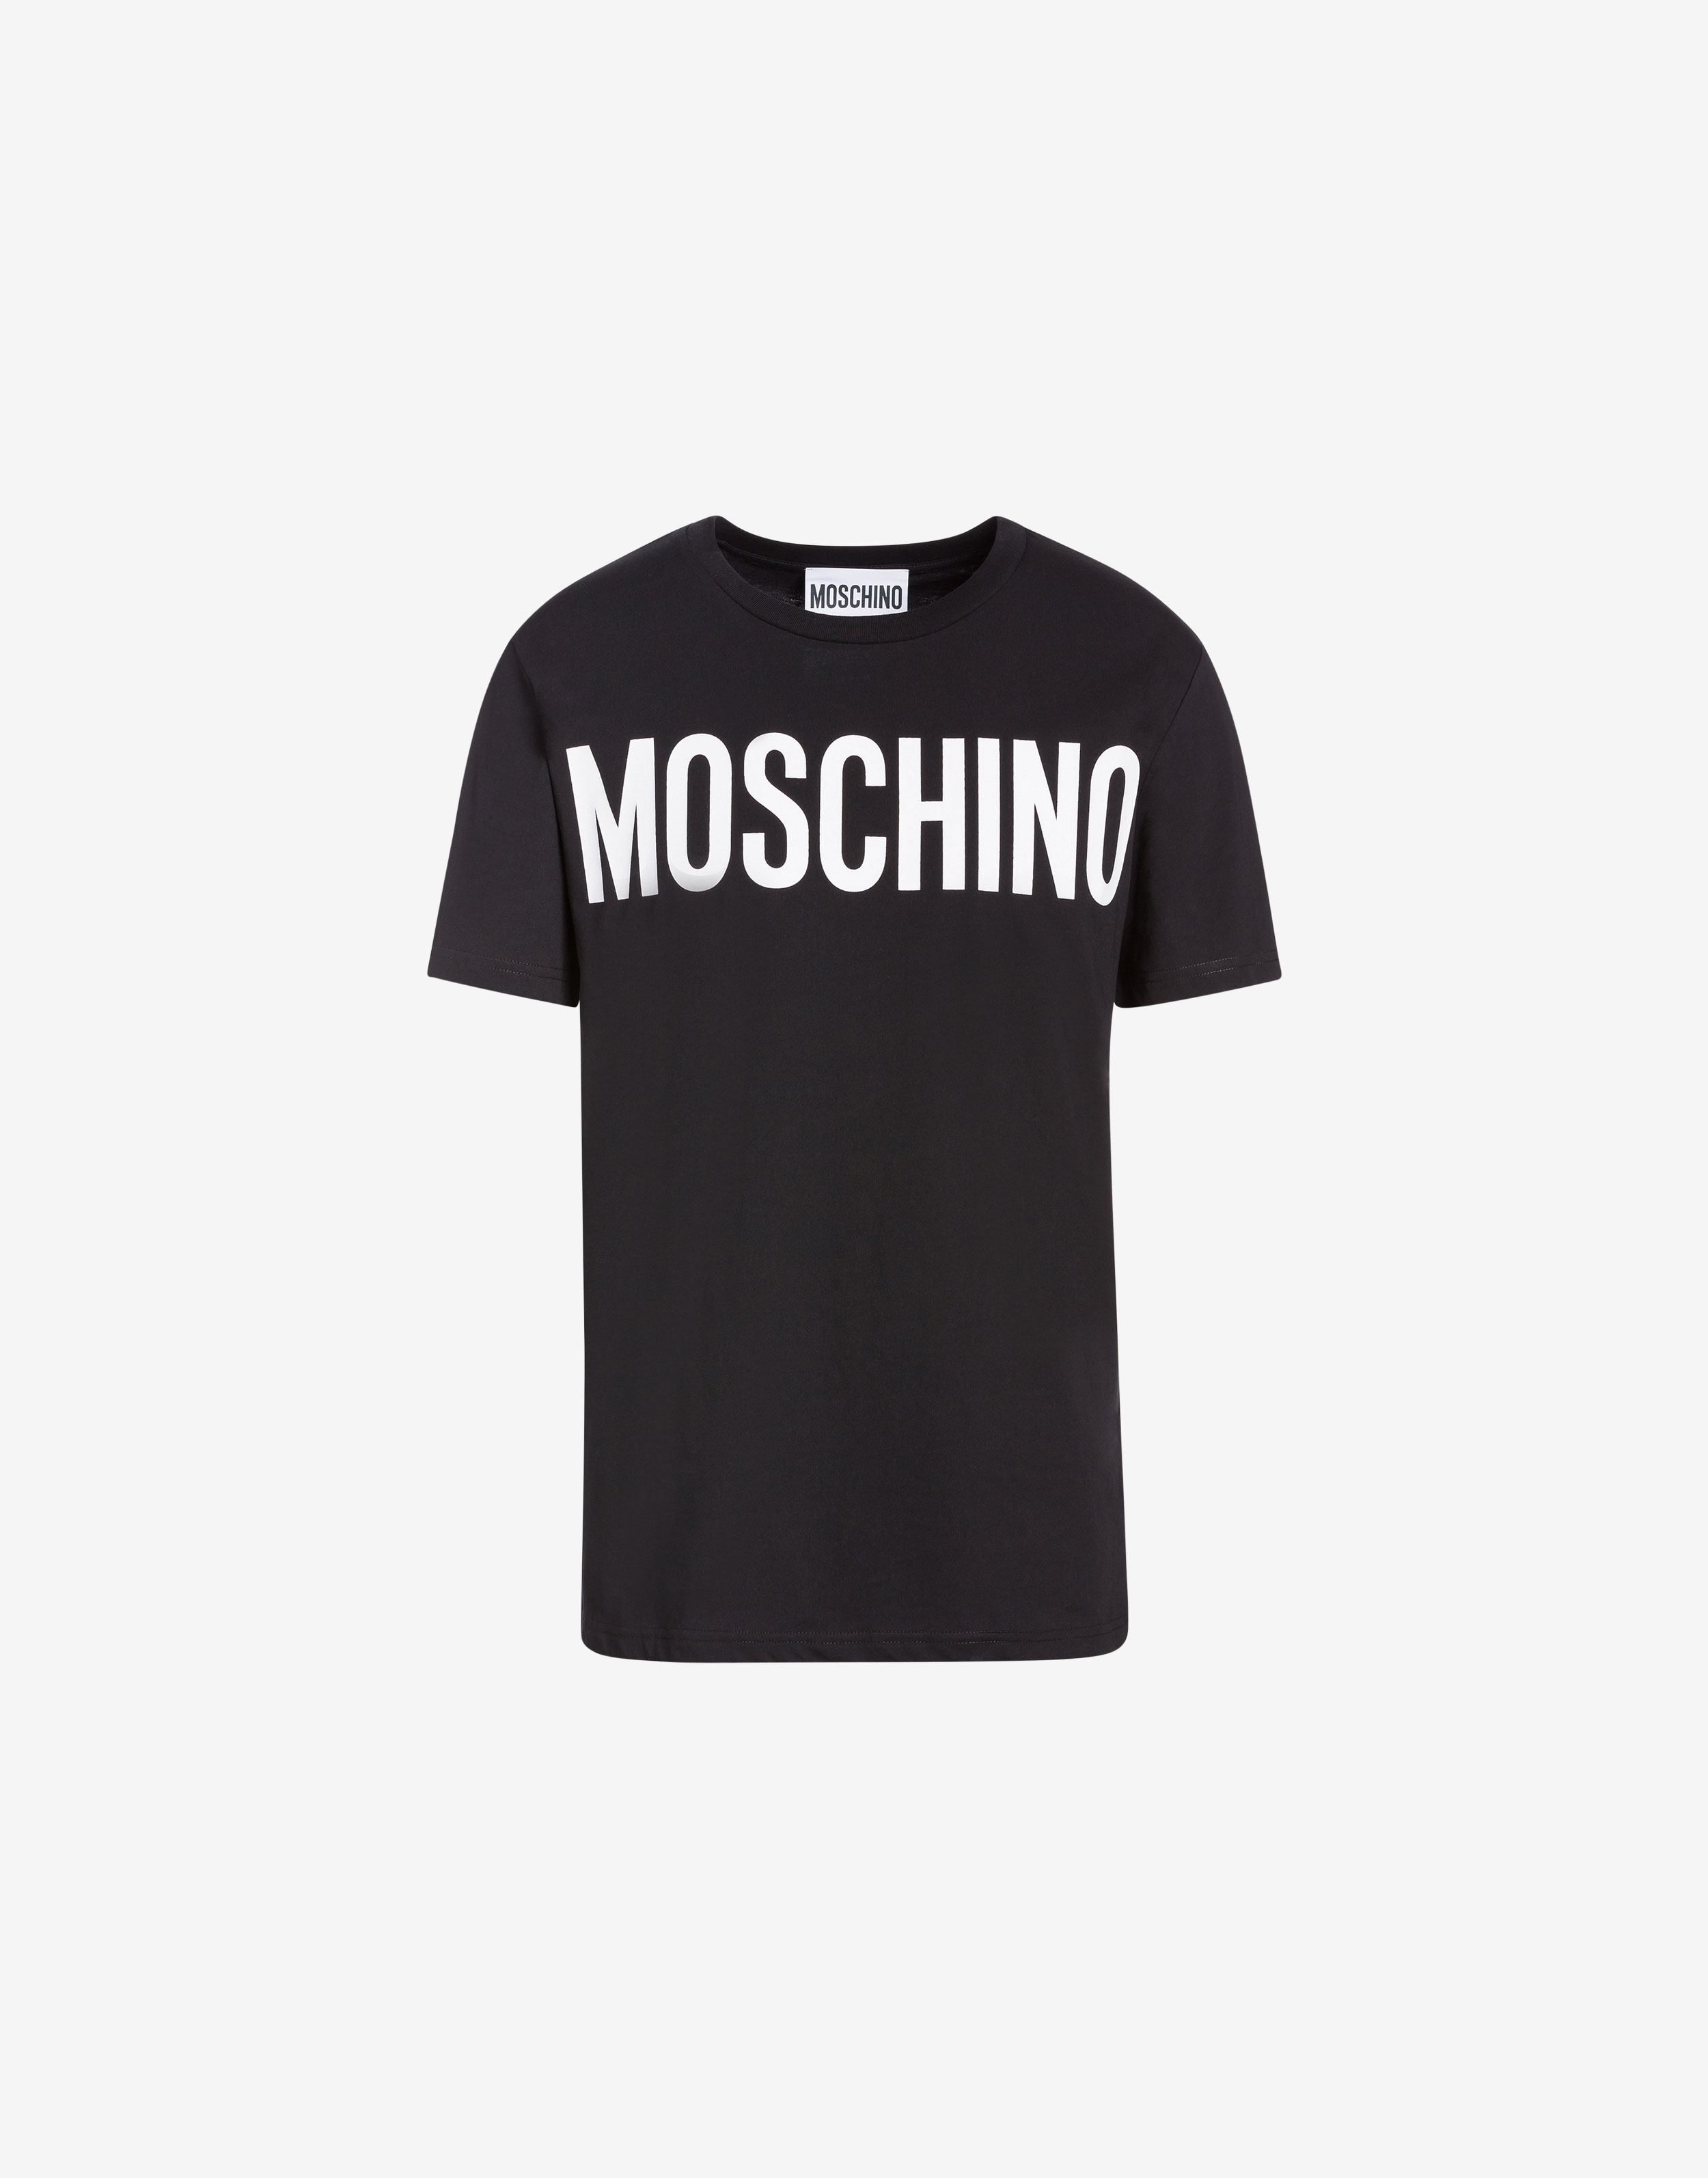 Moschino Hombre  Official Moschino® Store